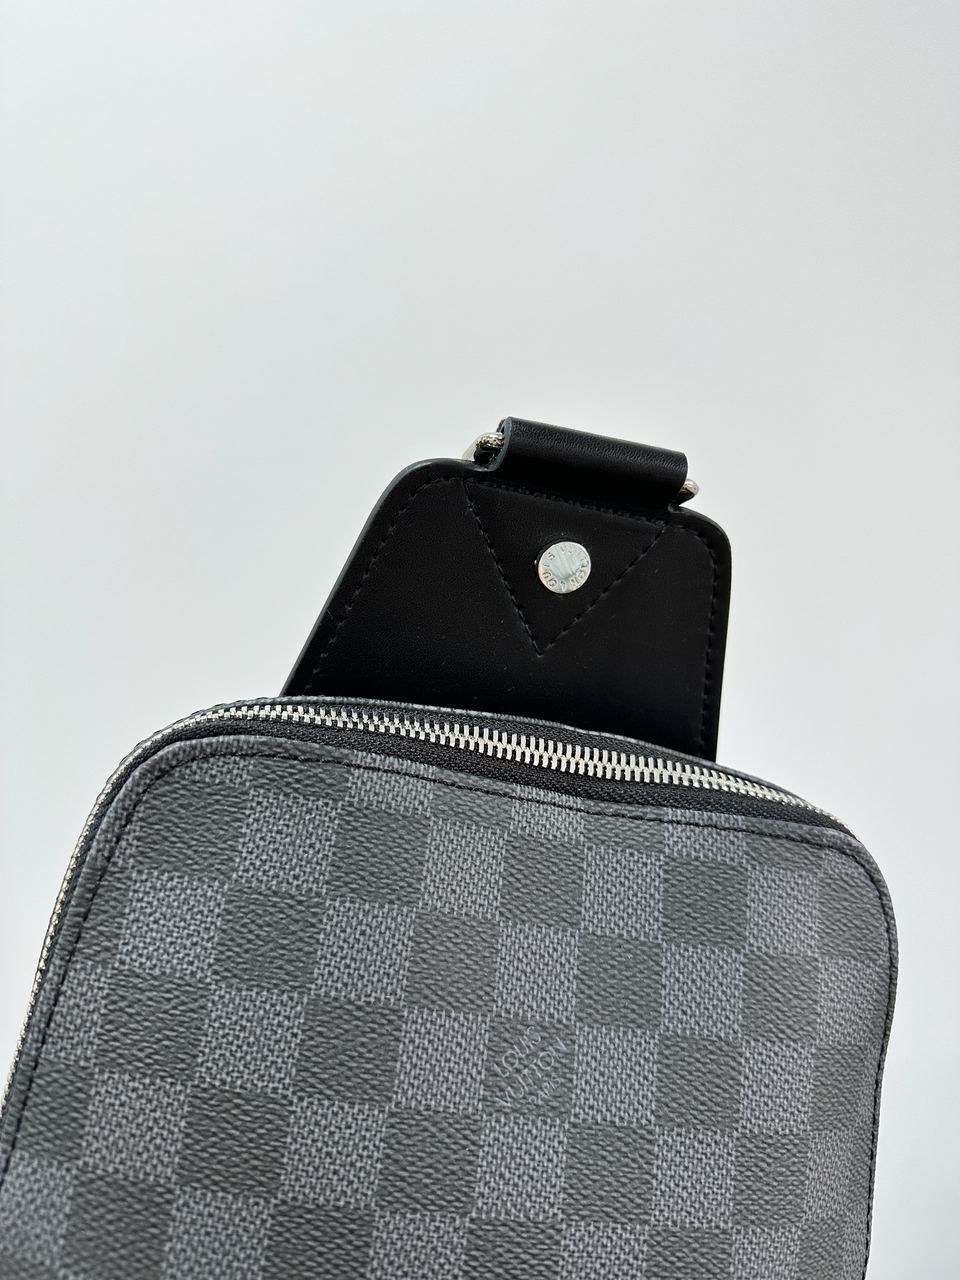 Мужская сумка Louis Vuitton через плечо мессенджер барсетка кросс-боди